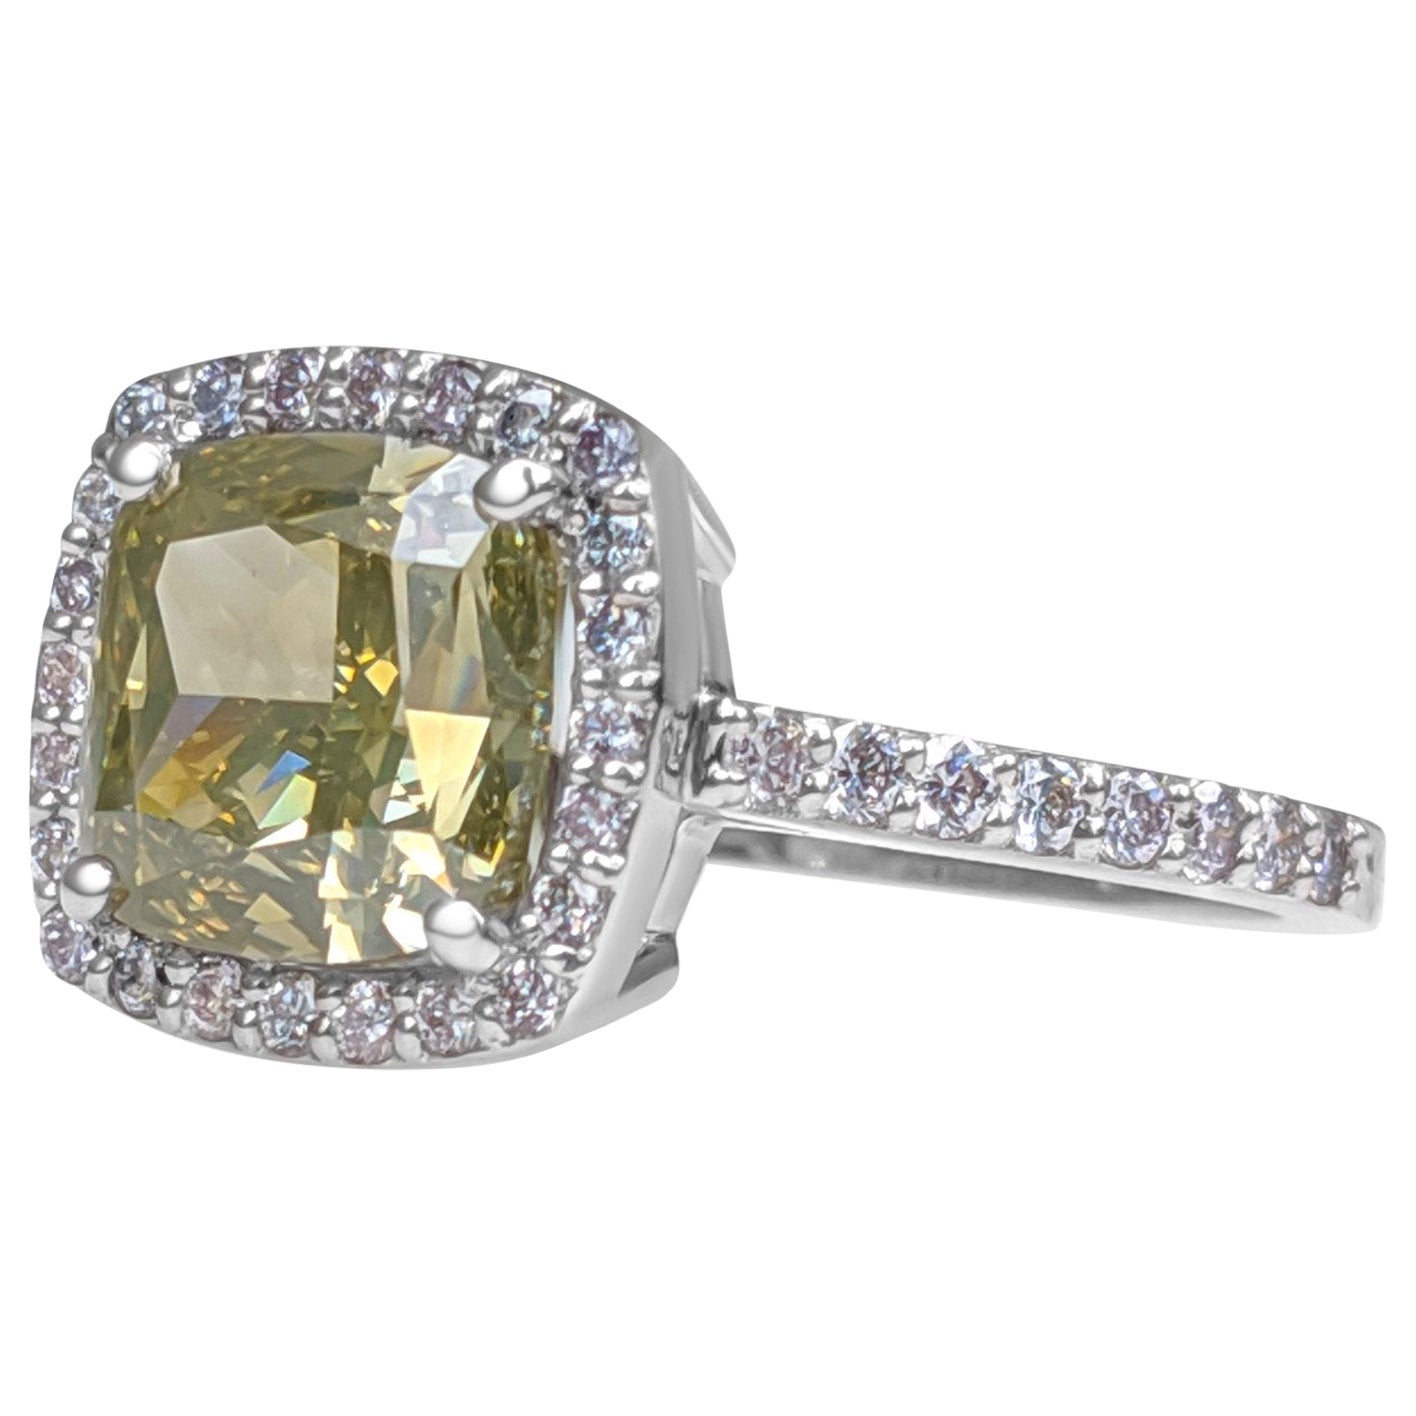 NO RESERVE! IGI 3.63 cttw Fancy Greenish Yellow Diamonds - 18K White Ring